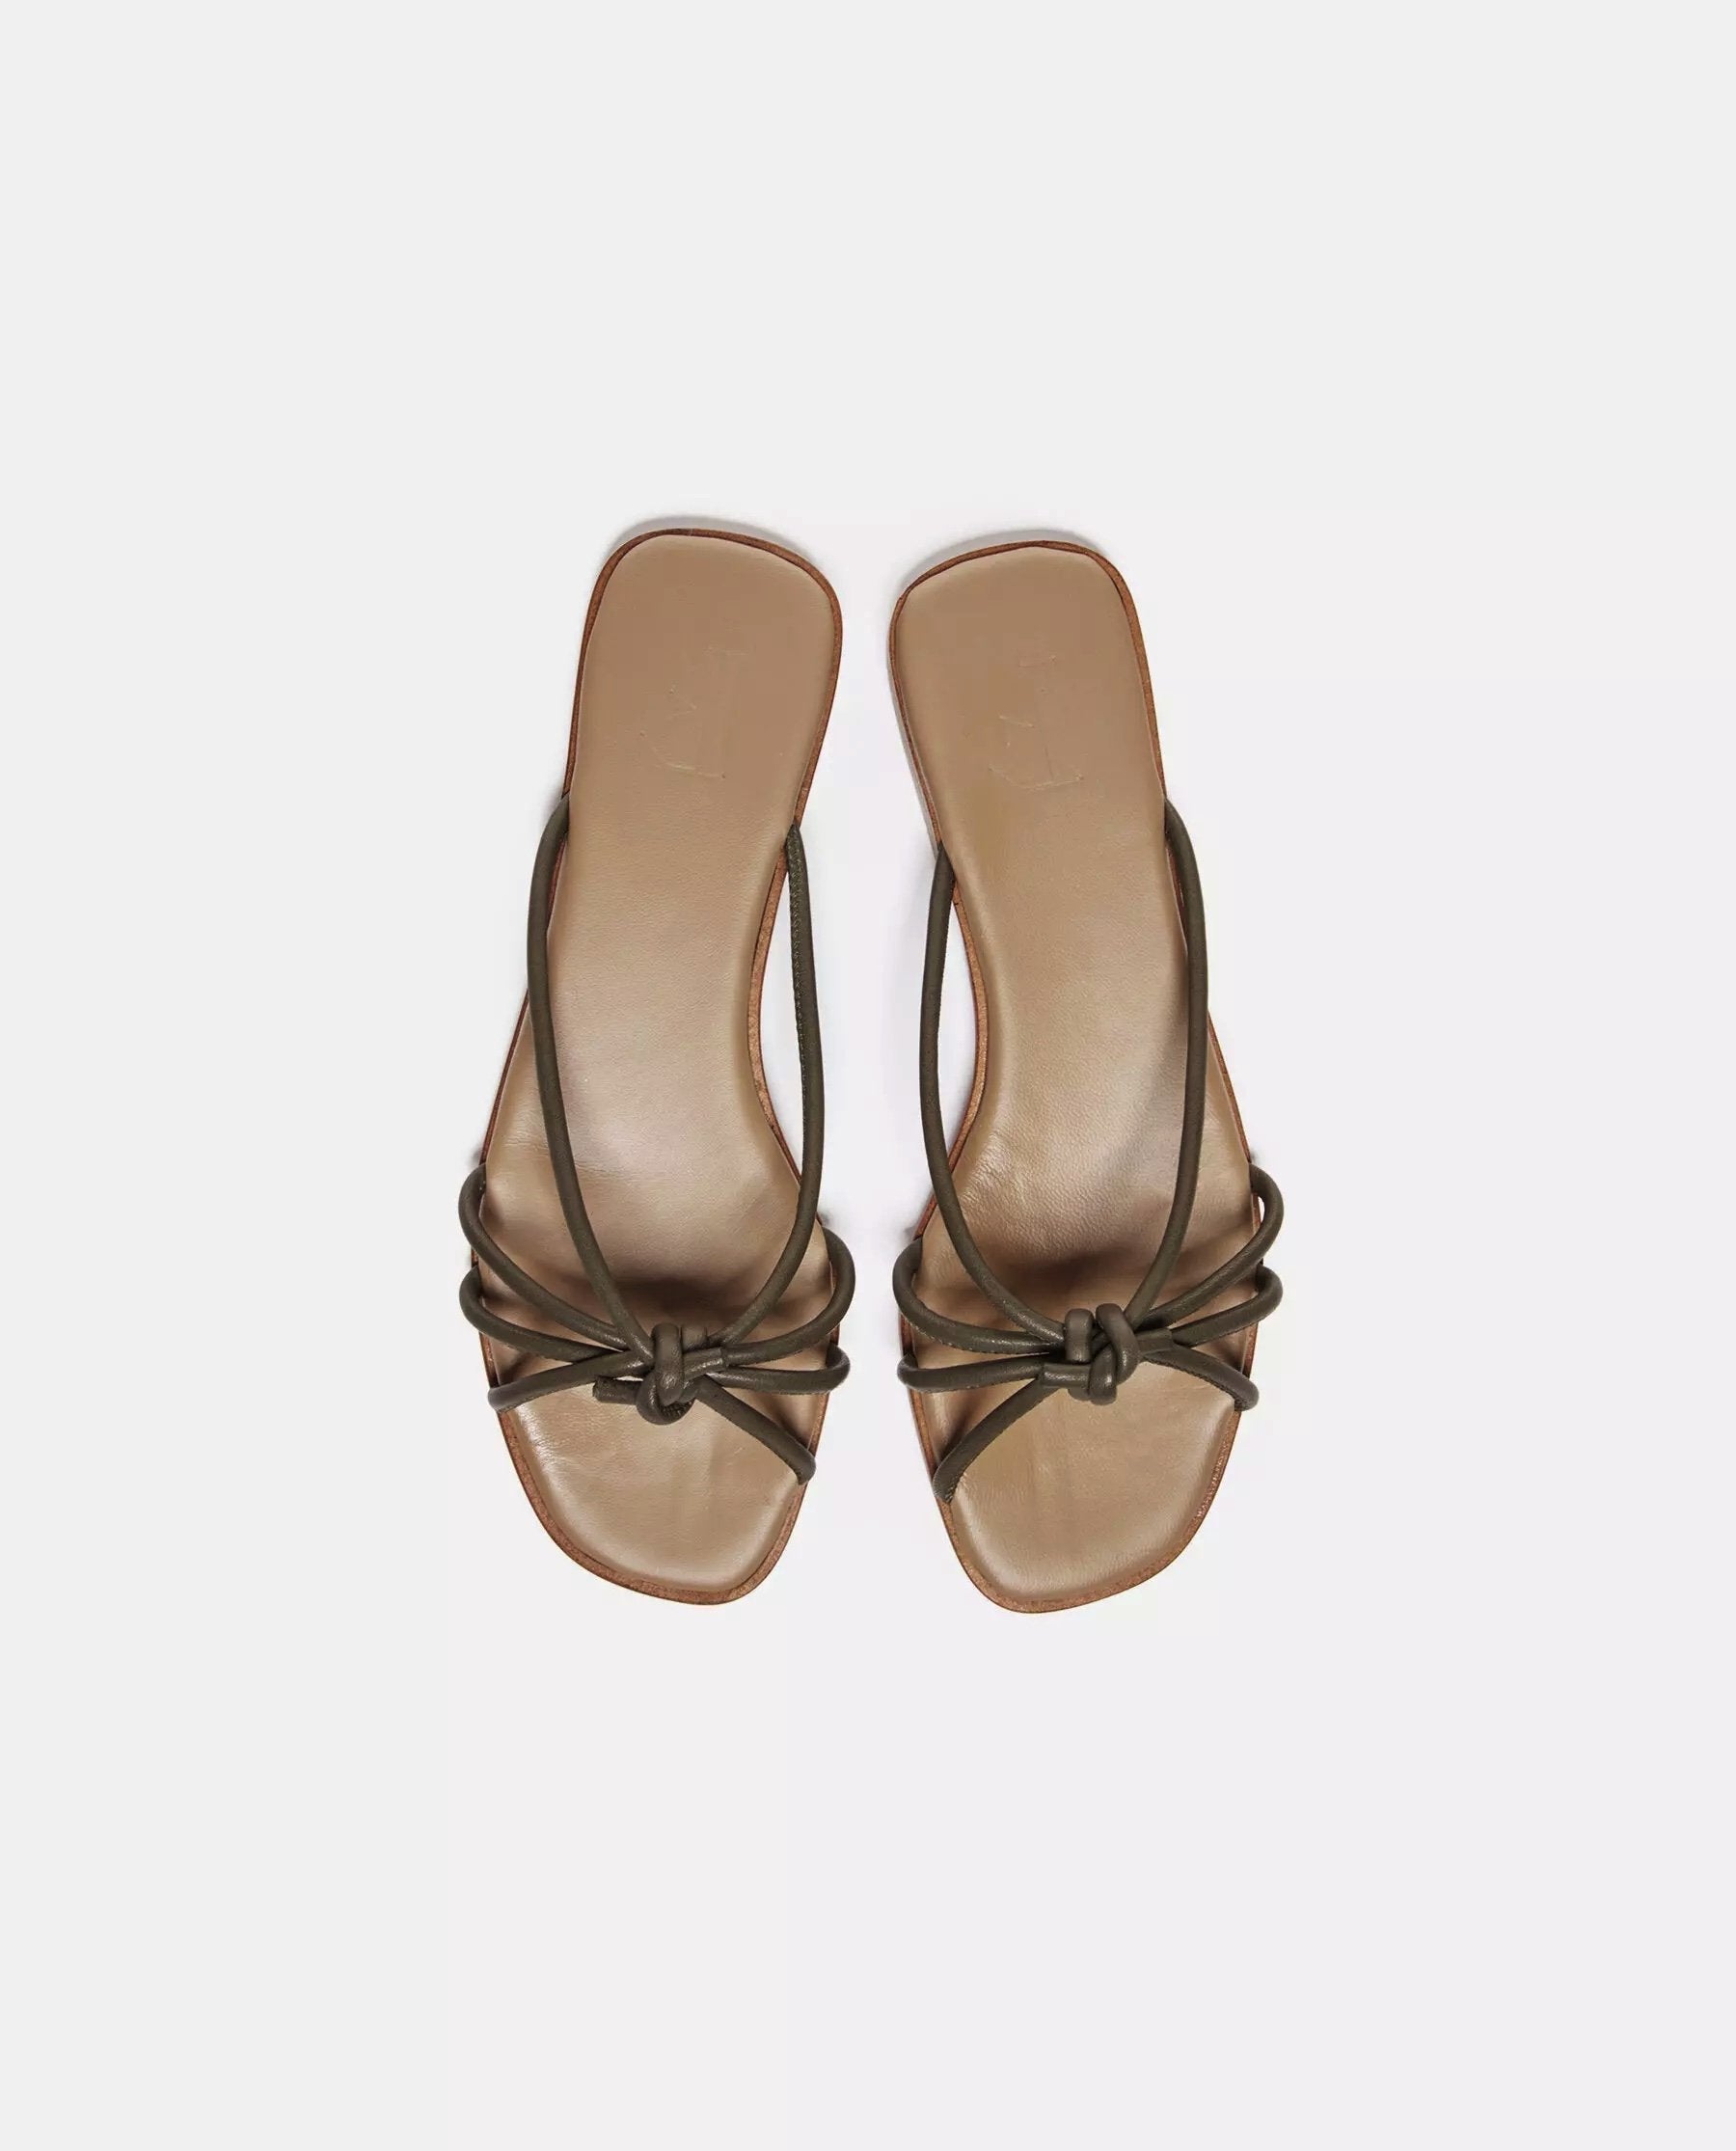 Yvette Leather Khaki Flat Sandals 21010700801-013 - 4